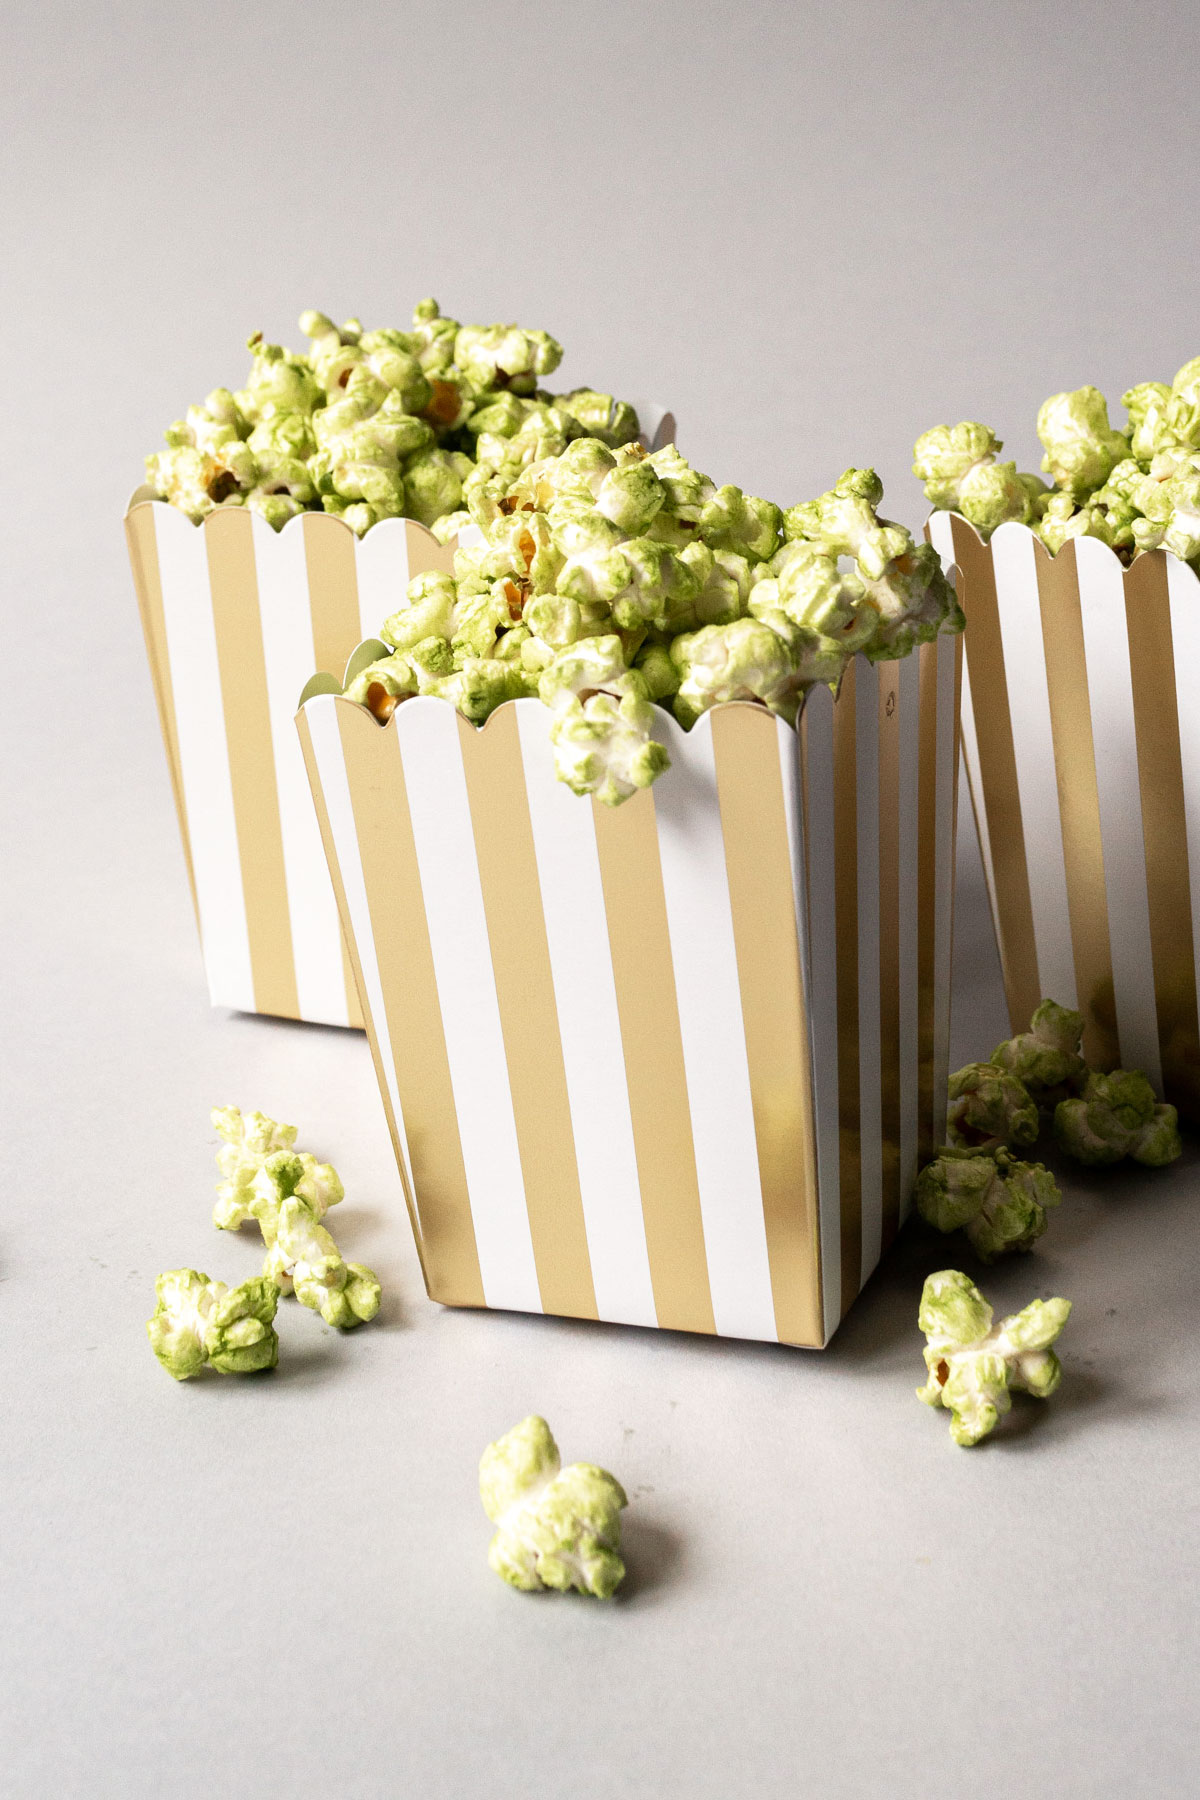 Matcha popcorn in striped popcorn boxes.